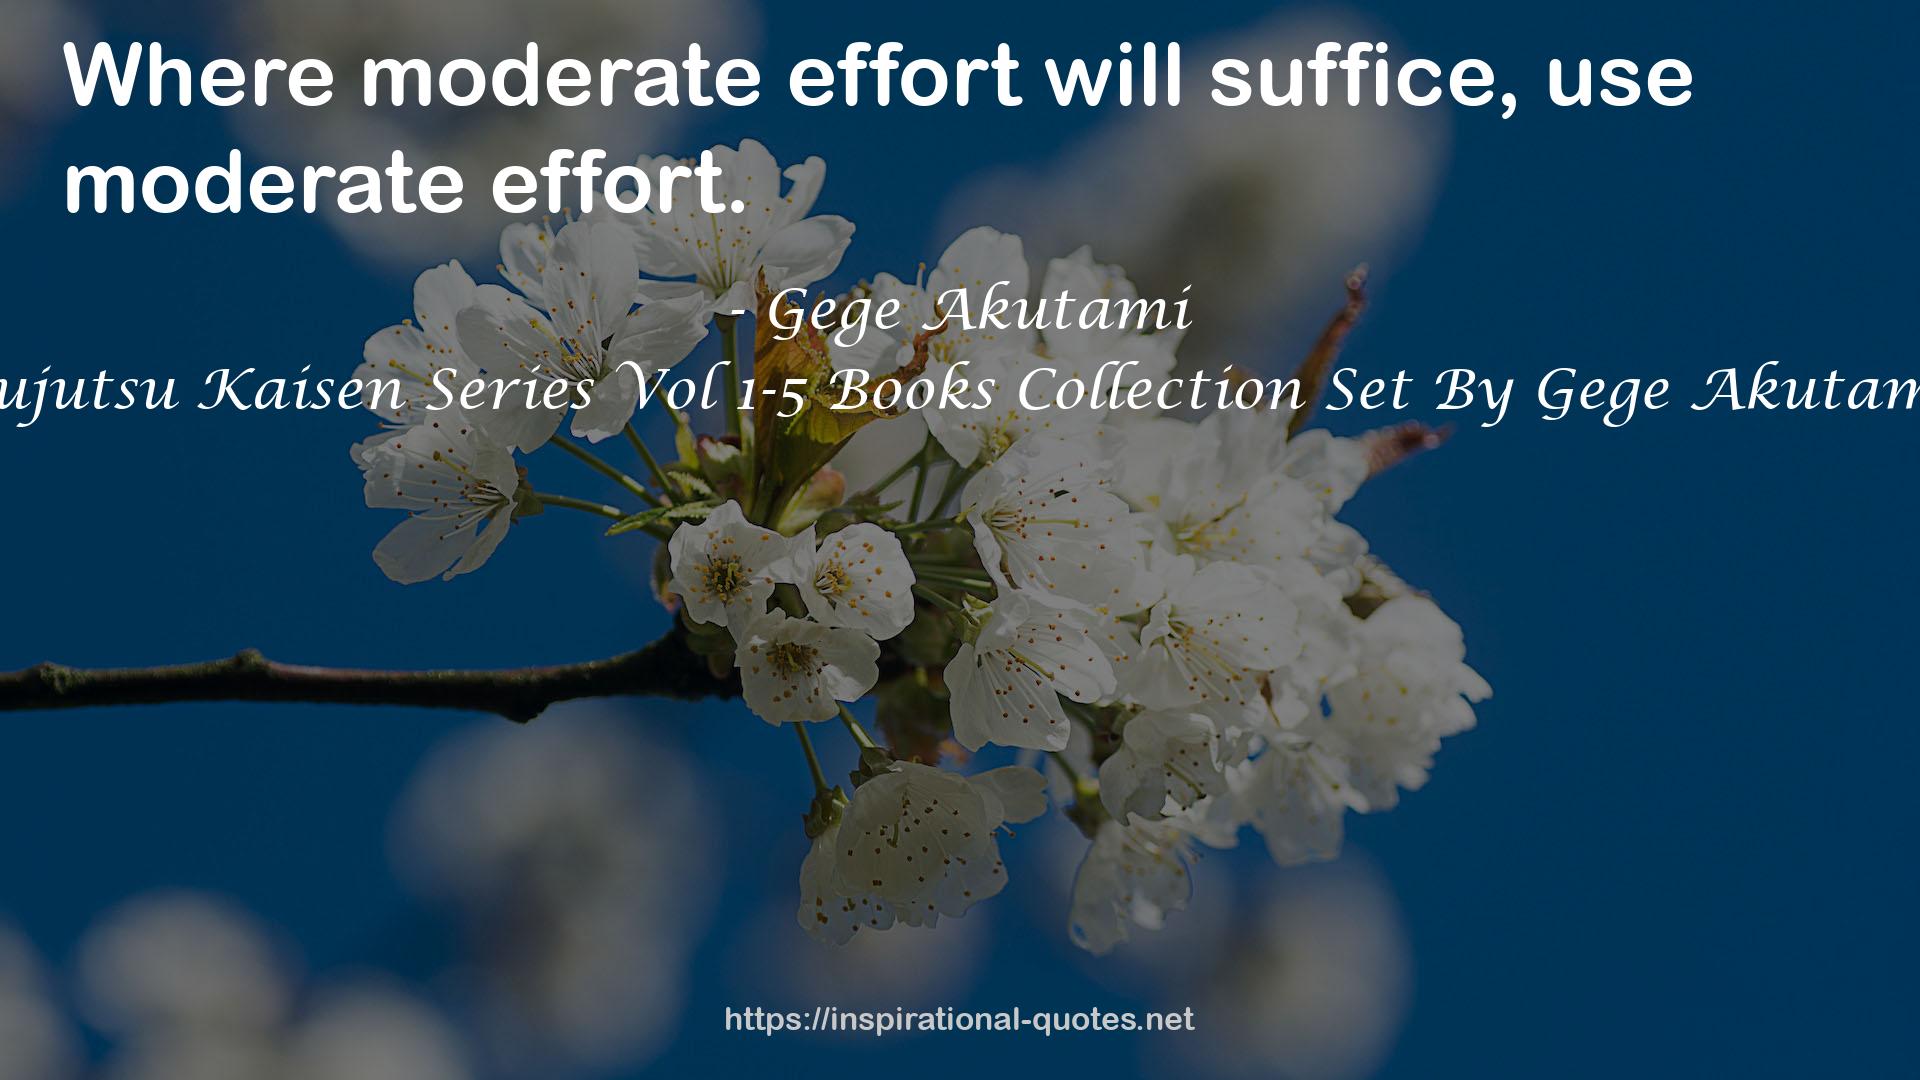 Jujutsu Kaisen Series Vol 1-5 Books Collection Set By Gege Akutami QUOTES